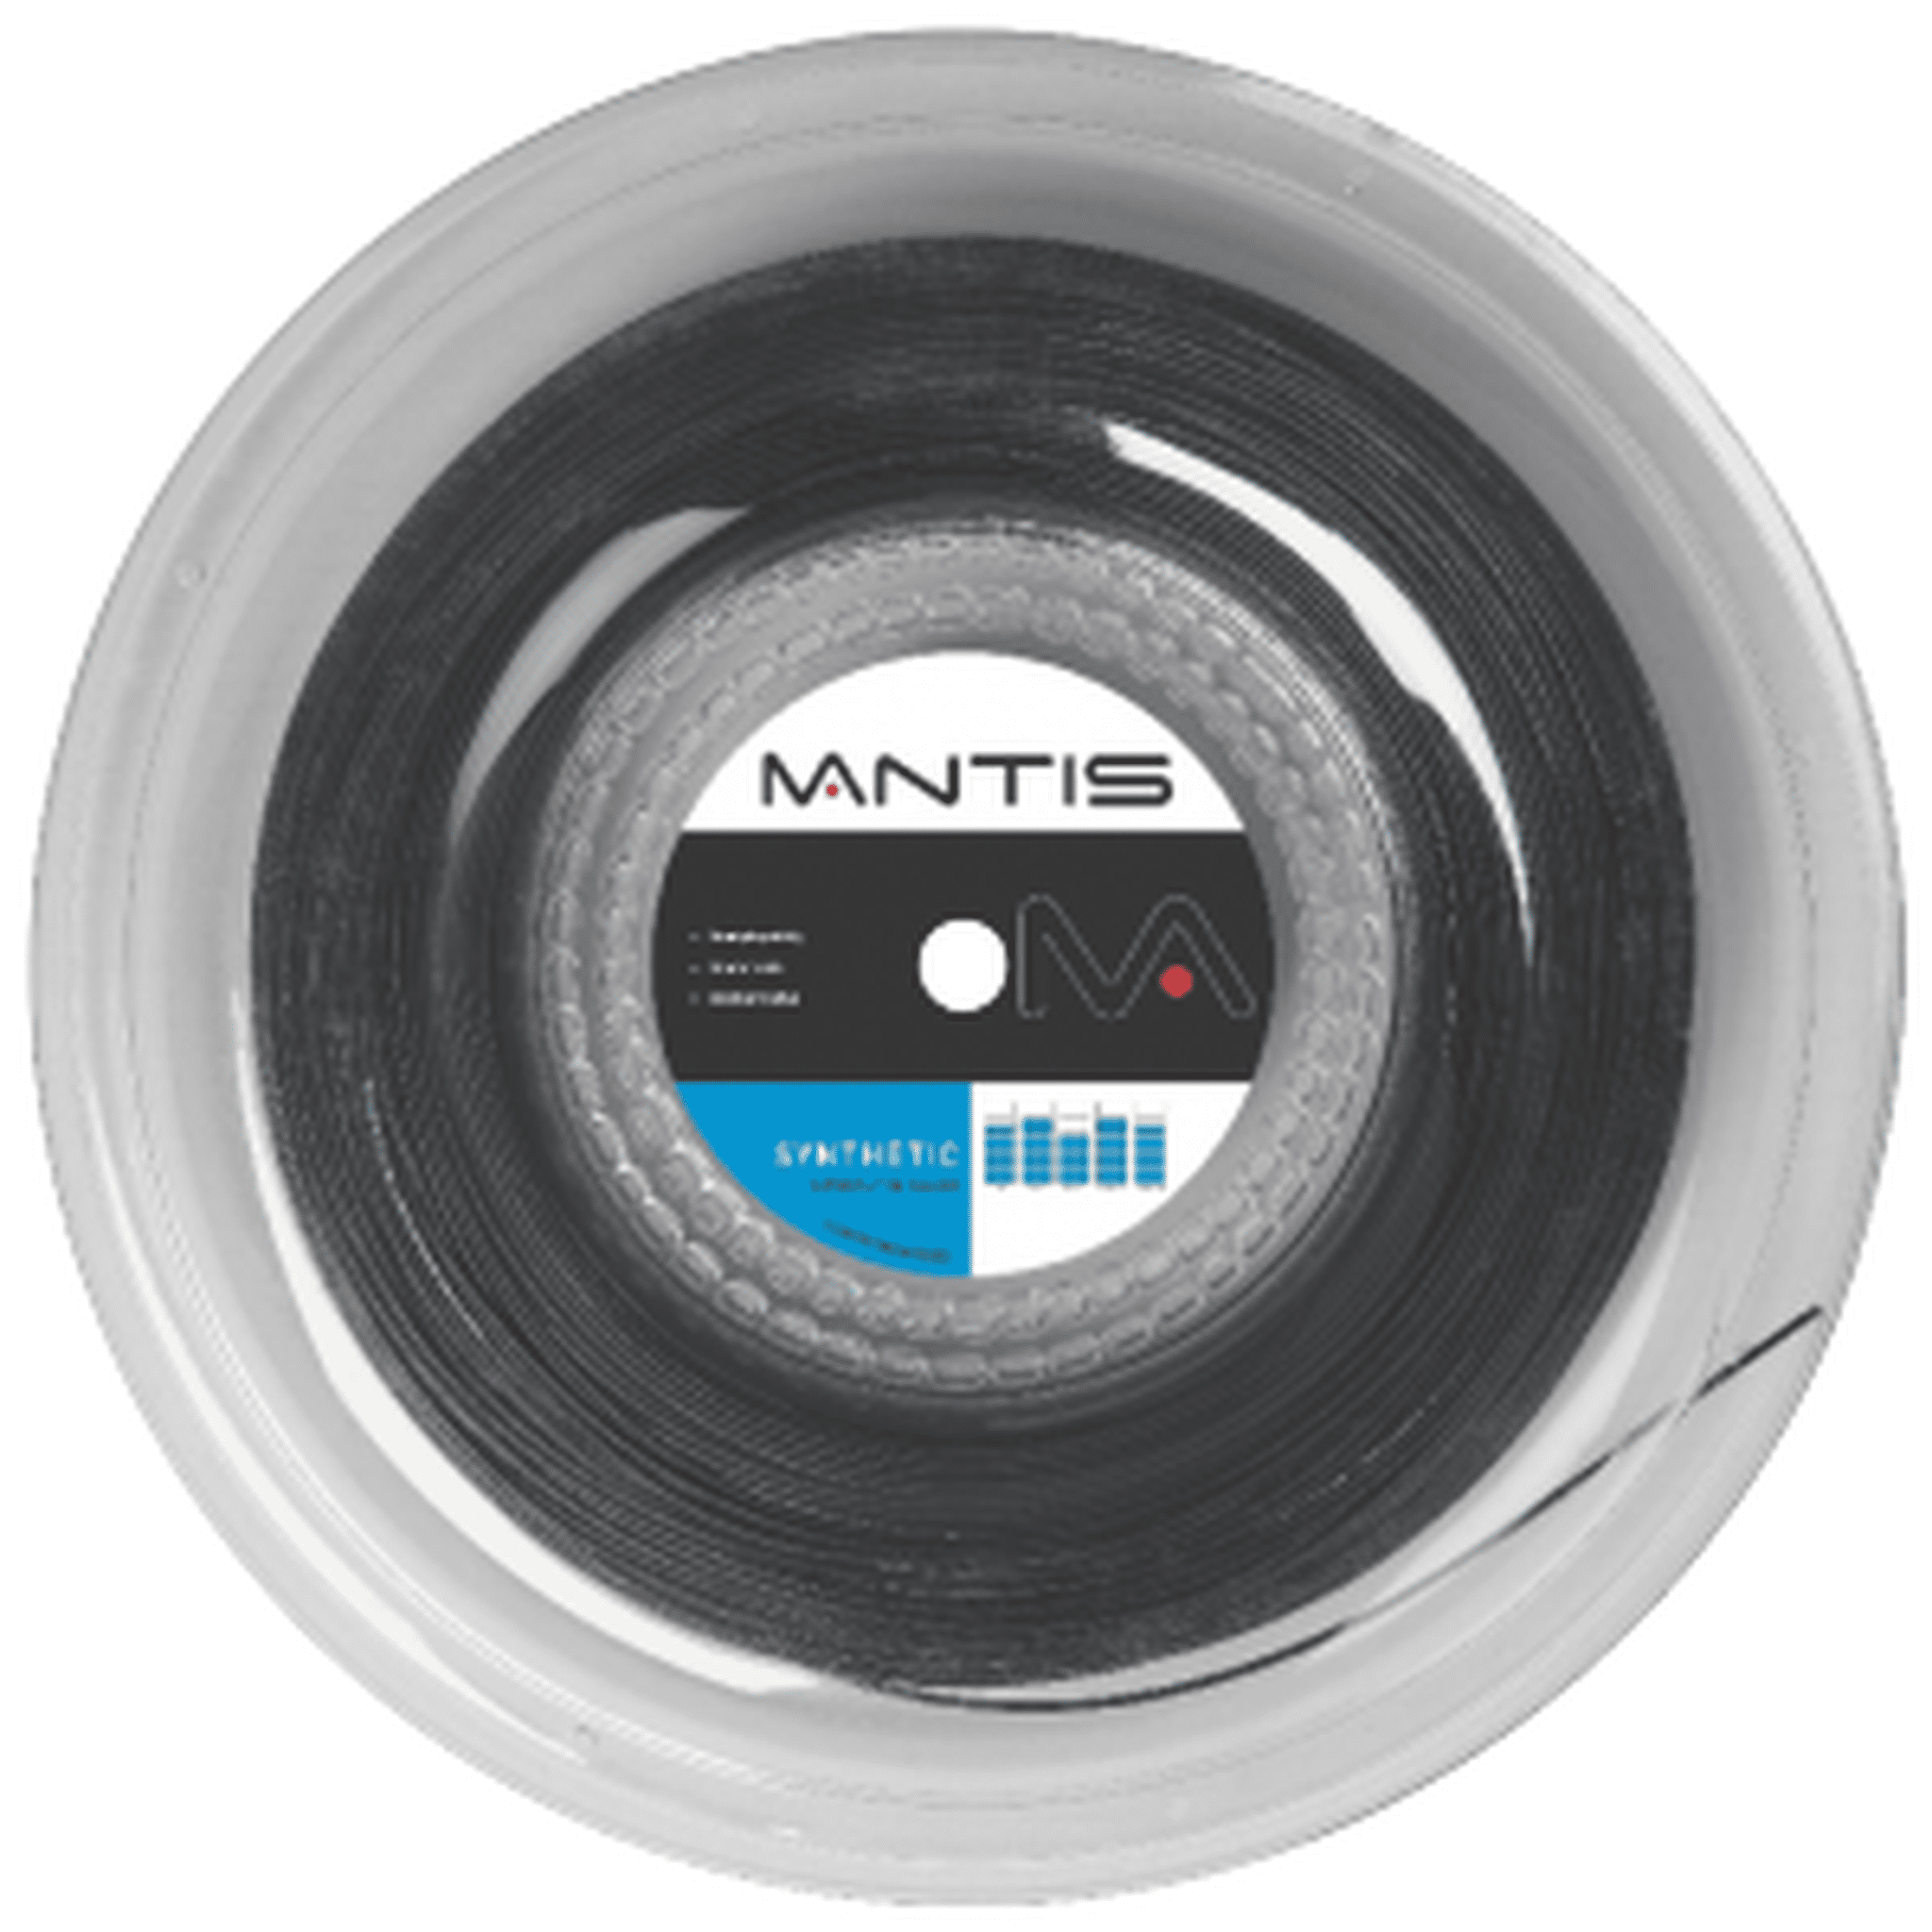 MANTIS Synthetic String 15L - Reel 200m